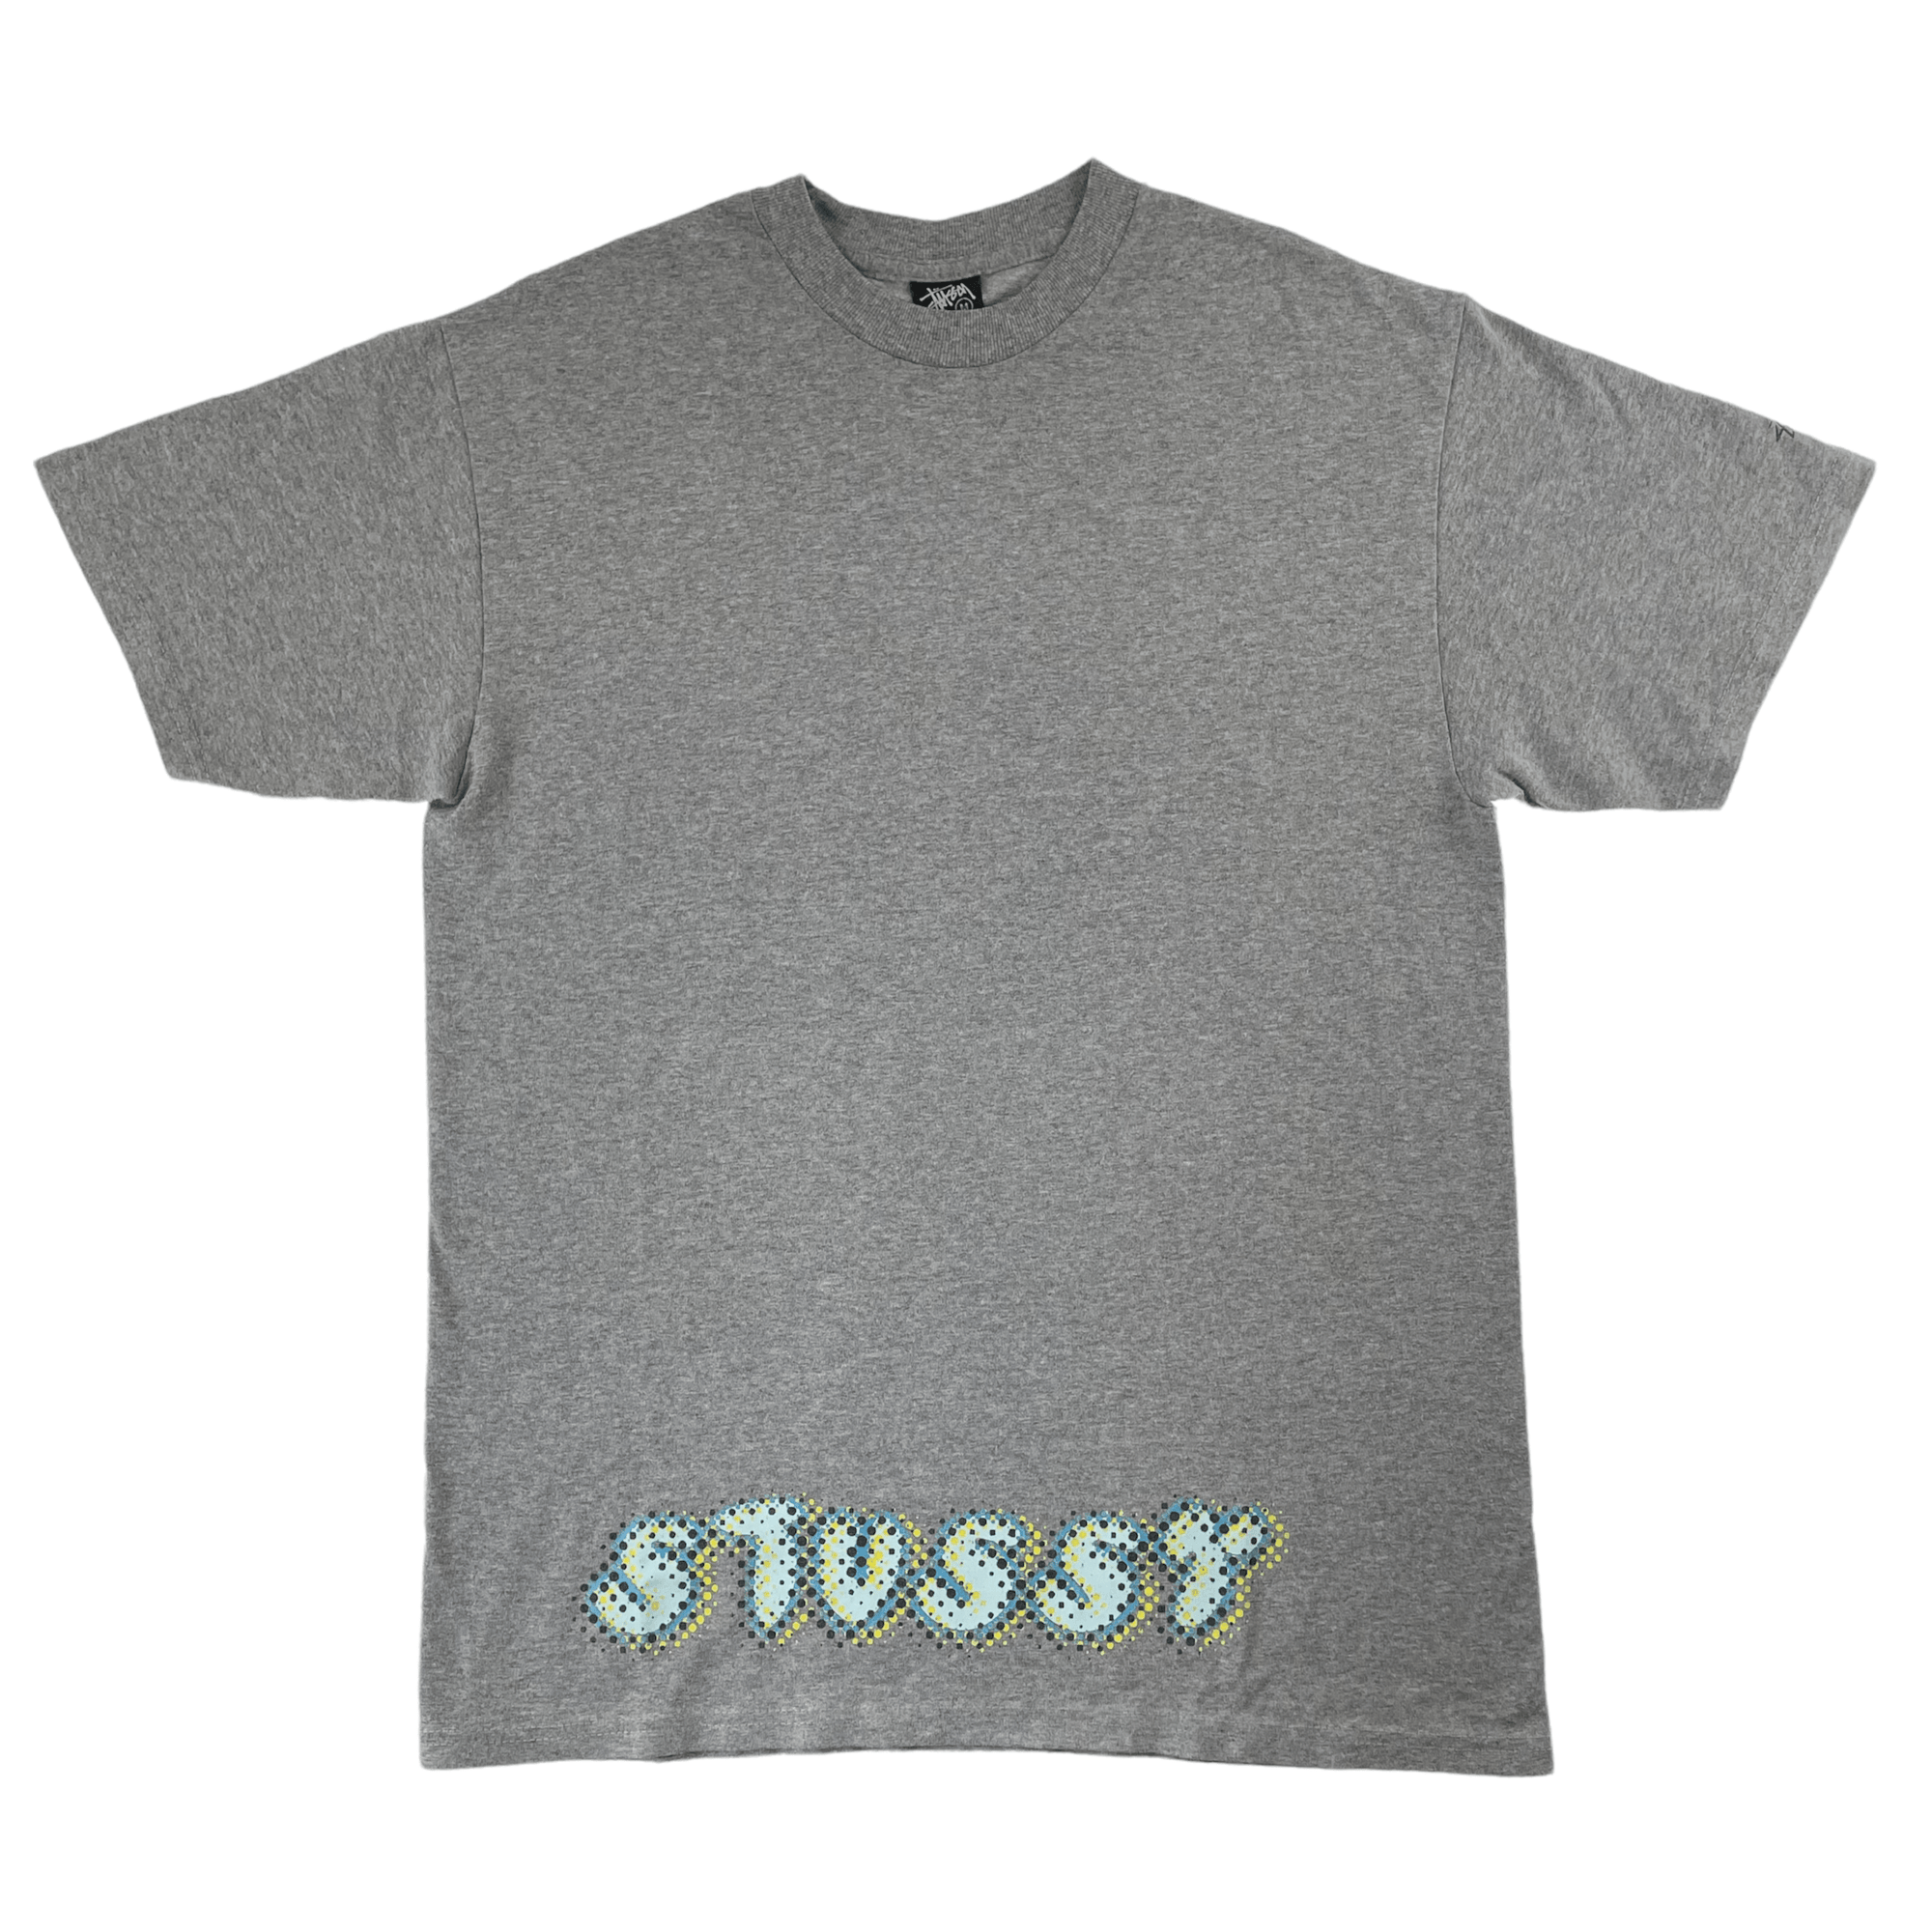 Vintage Stussy logo t shirt size M - second wave vintage store